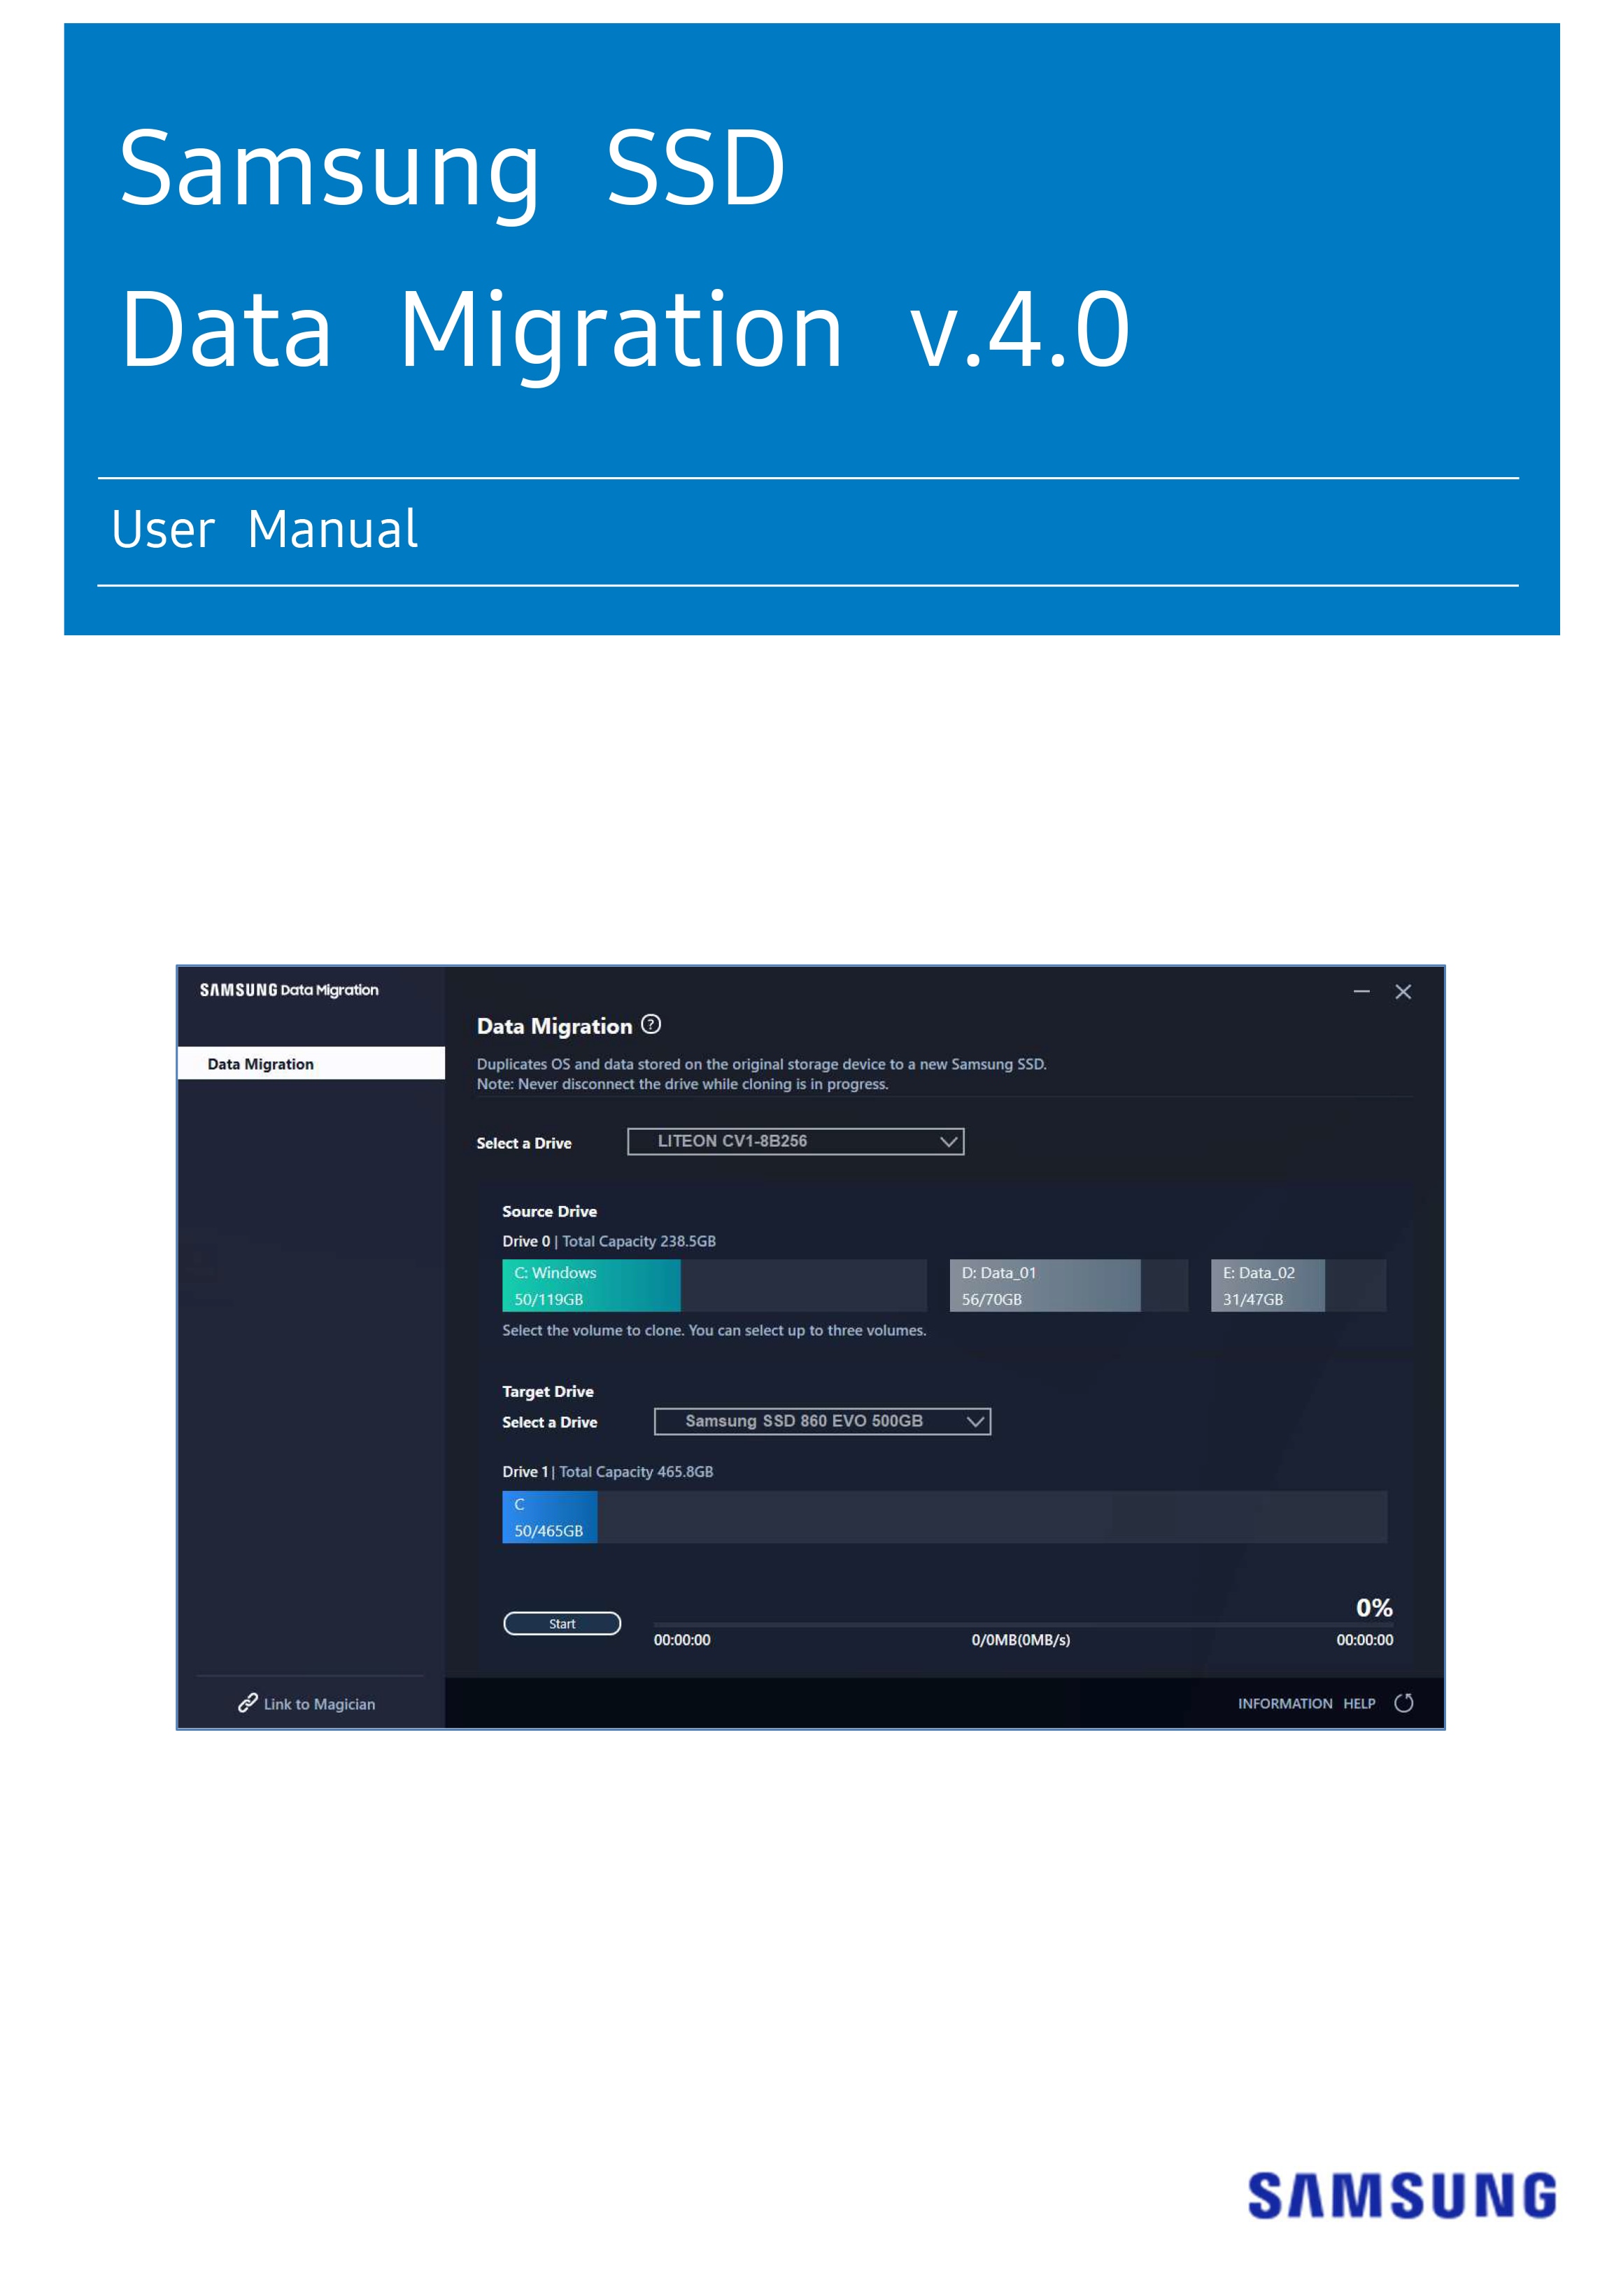 Data Migration User Manual